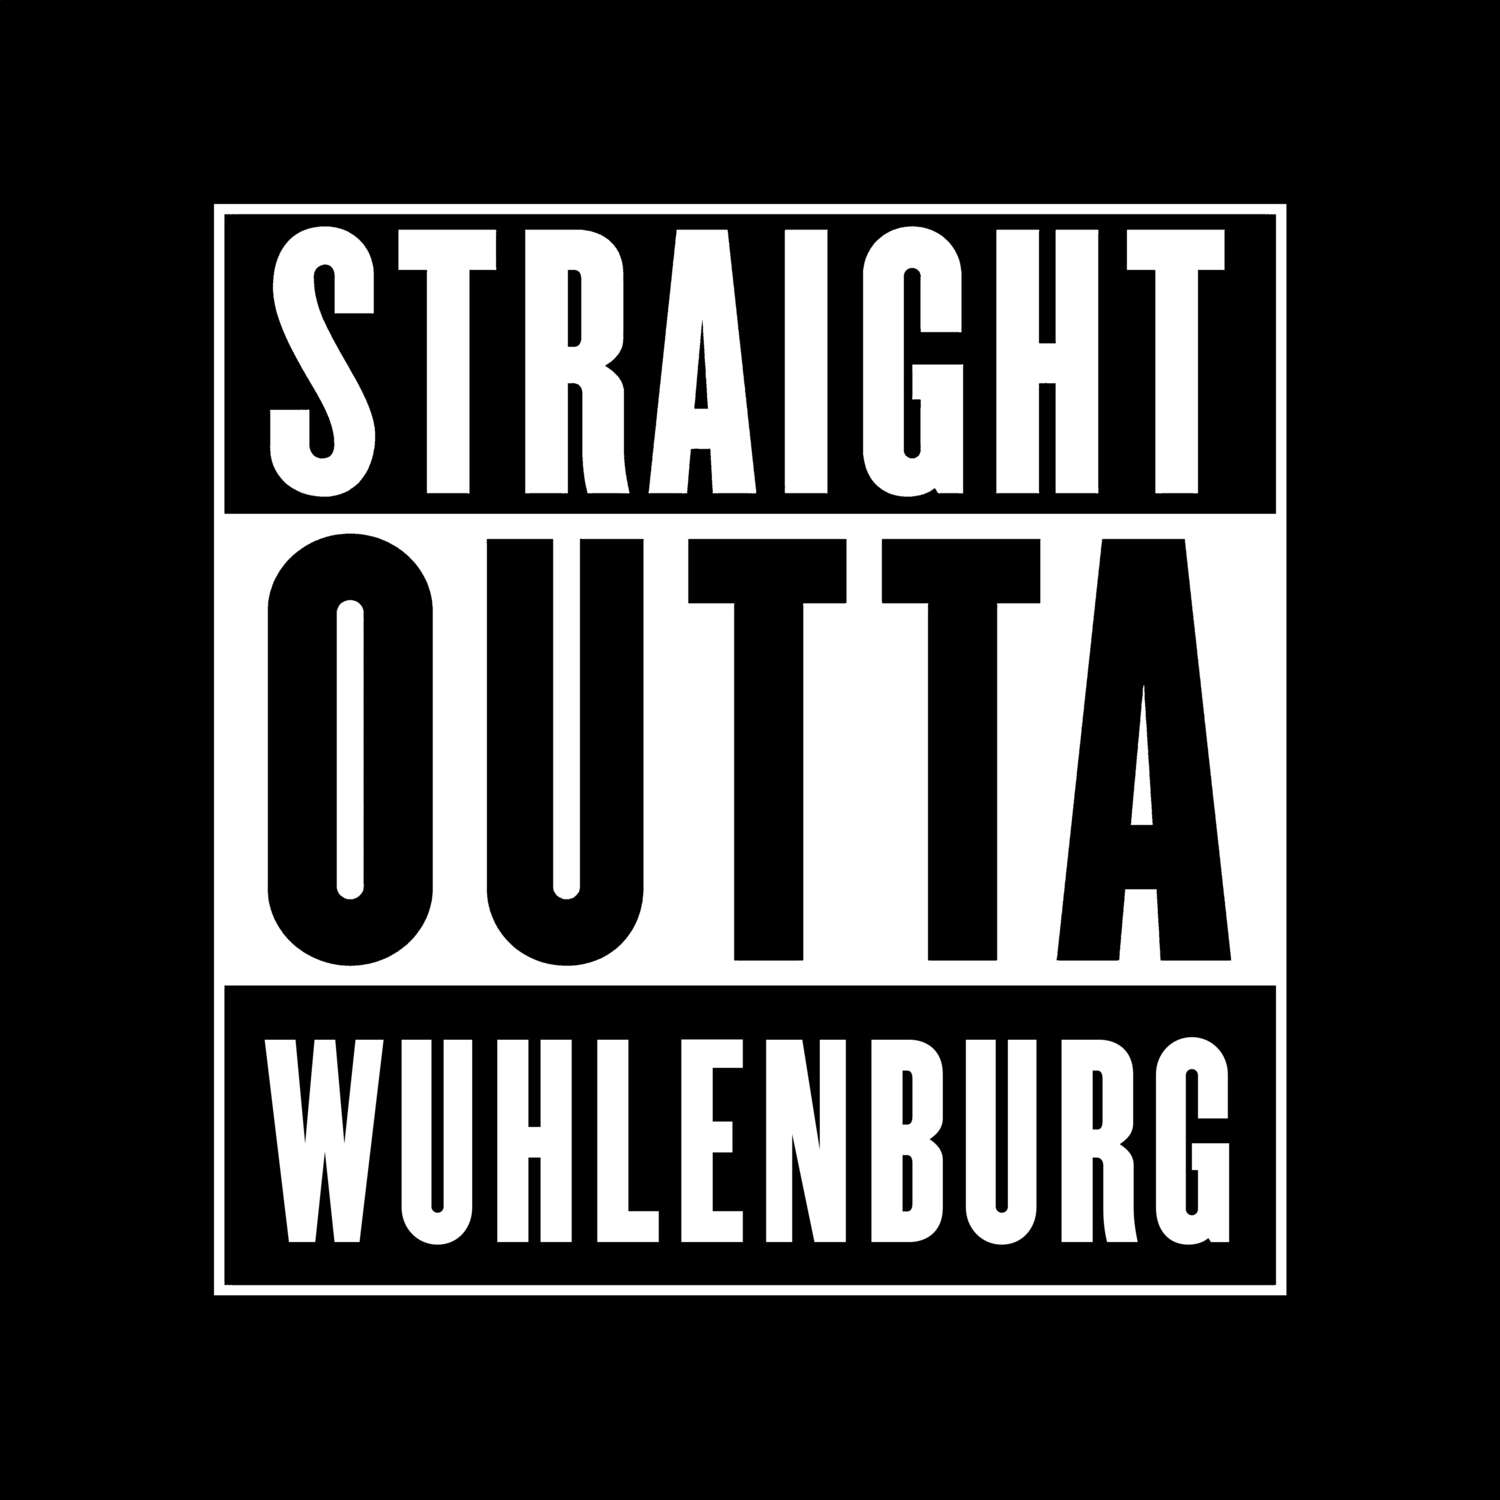 Wuhlenburg T-Shirt »Straight Outta«